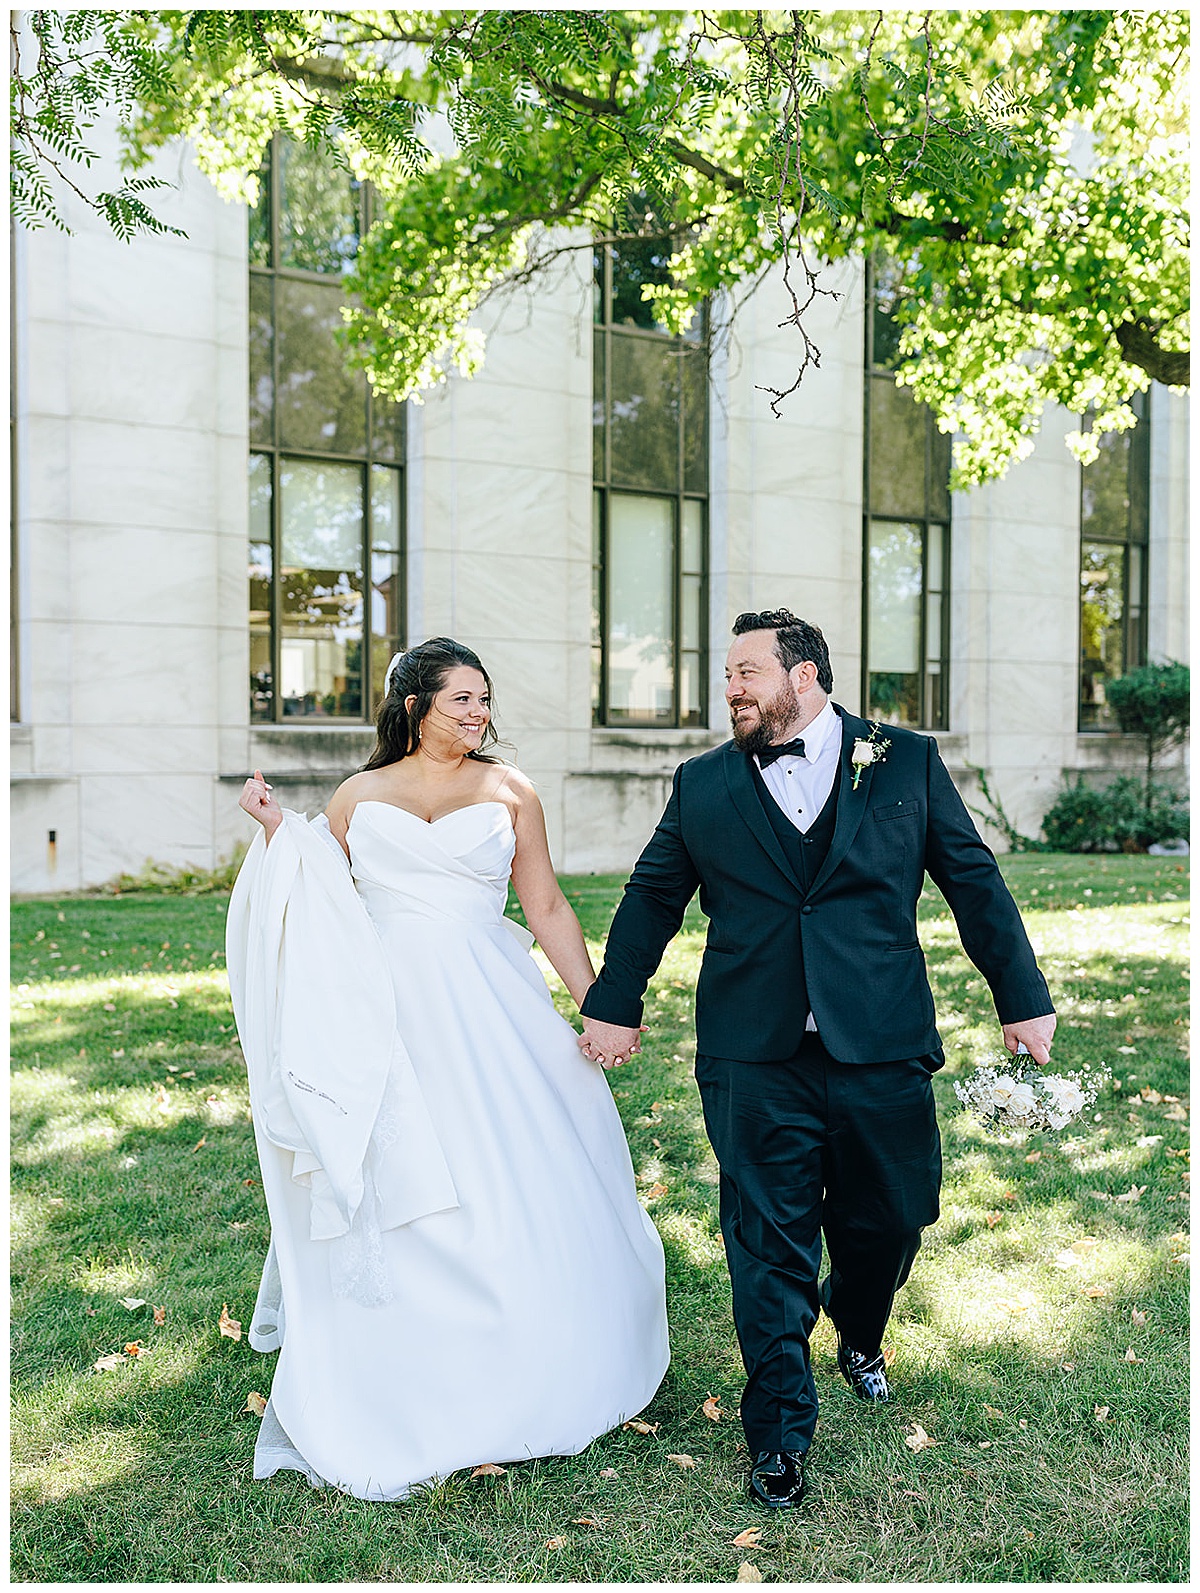 Bride and groom walk together for intimate backyard wedding